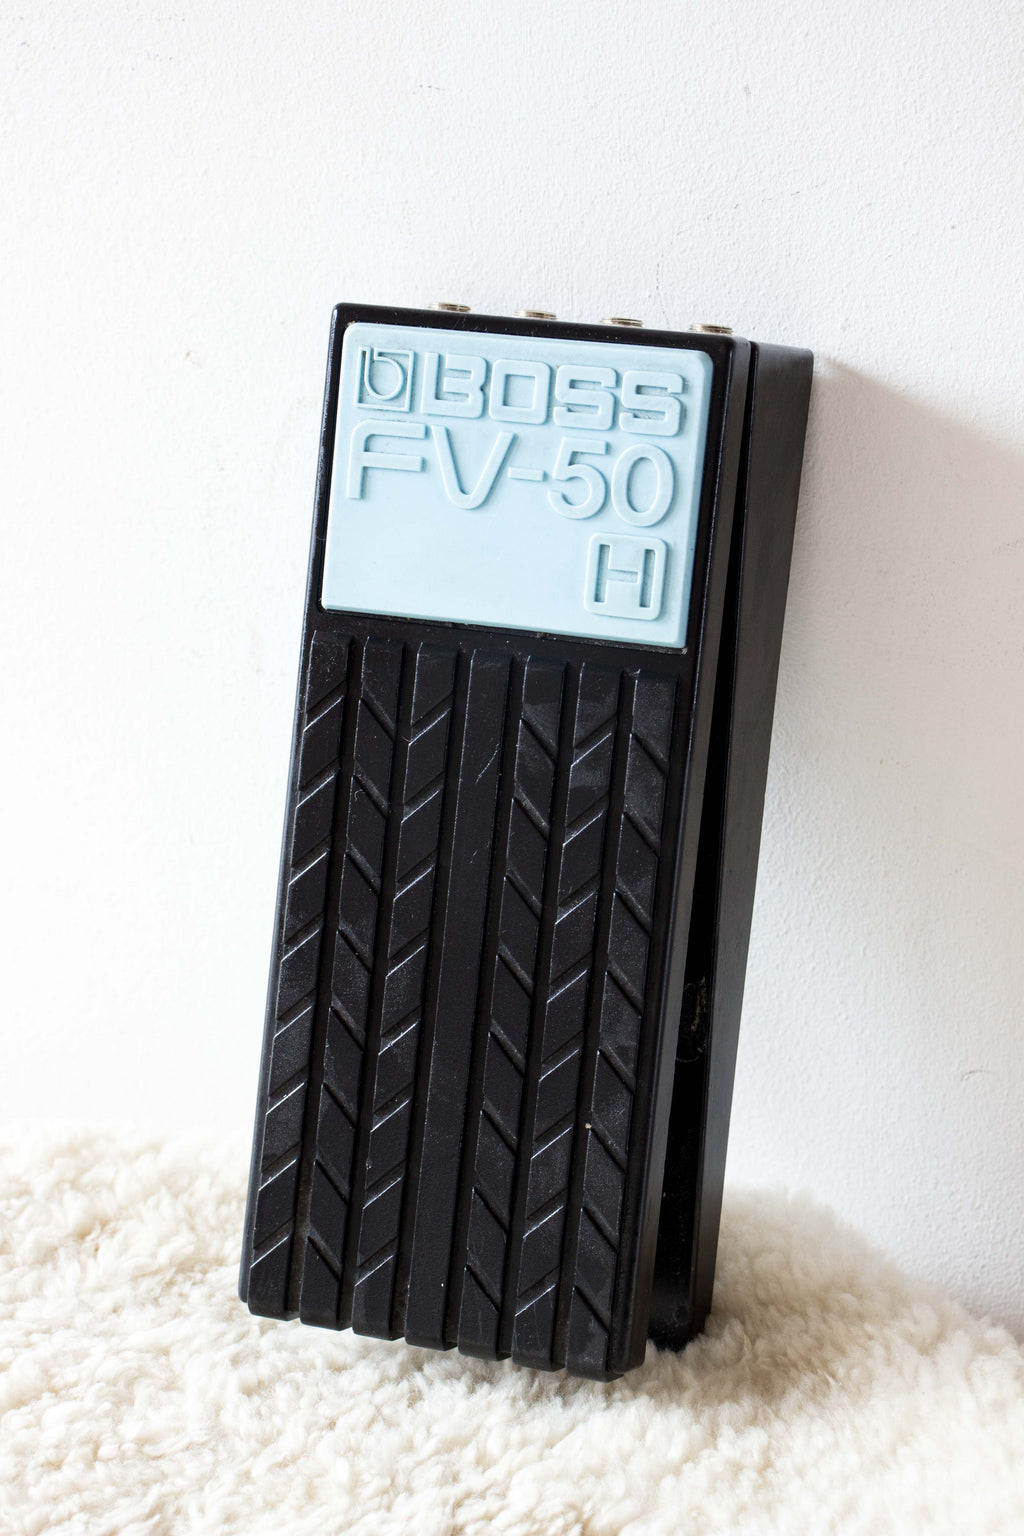 Boss FV-50H Volume Pedal